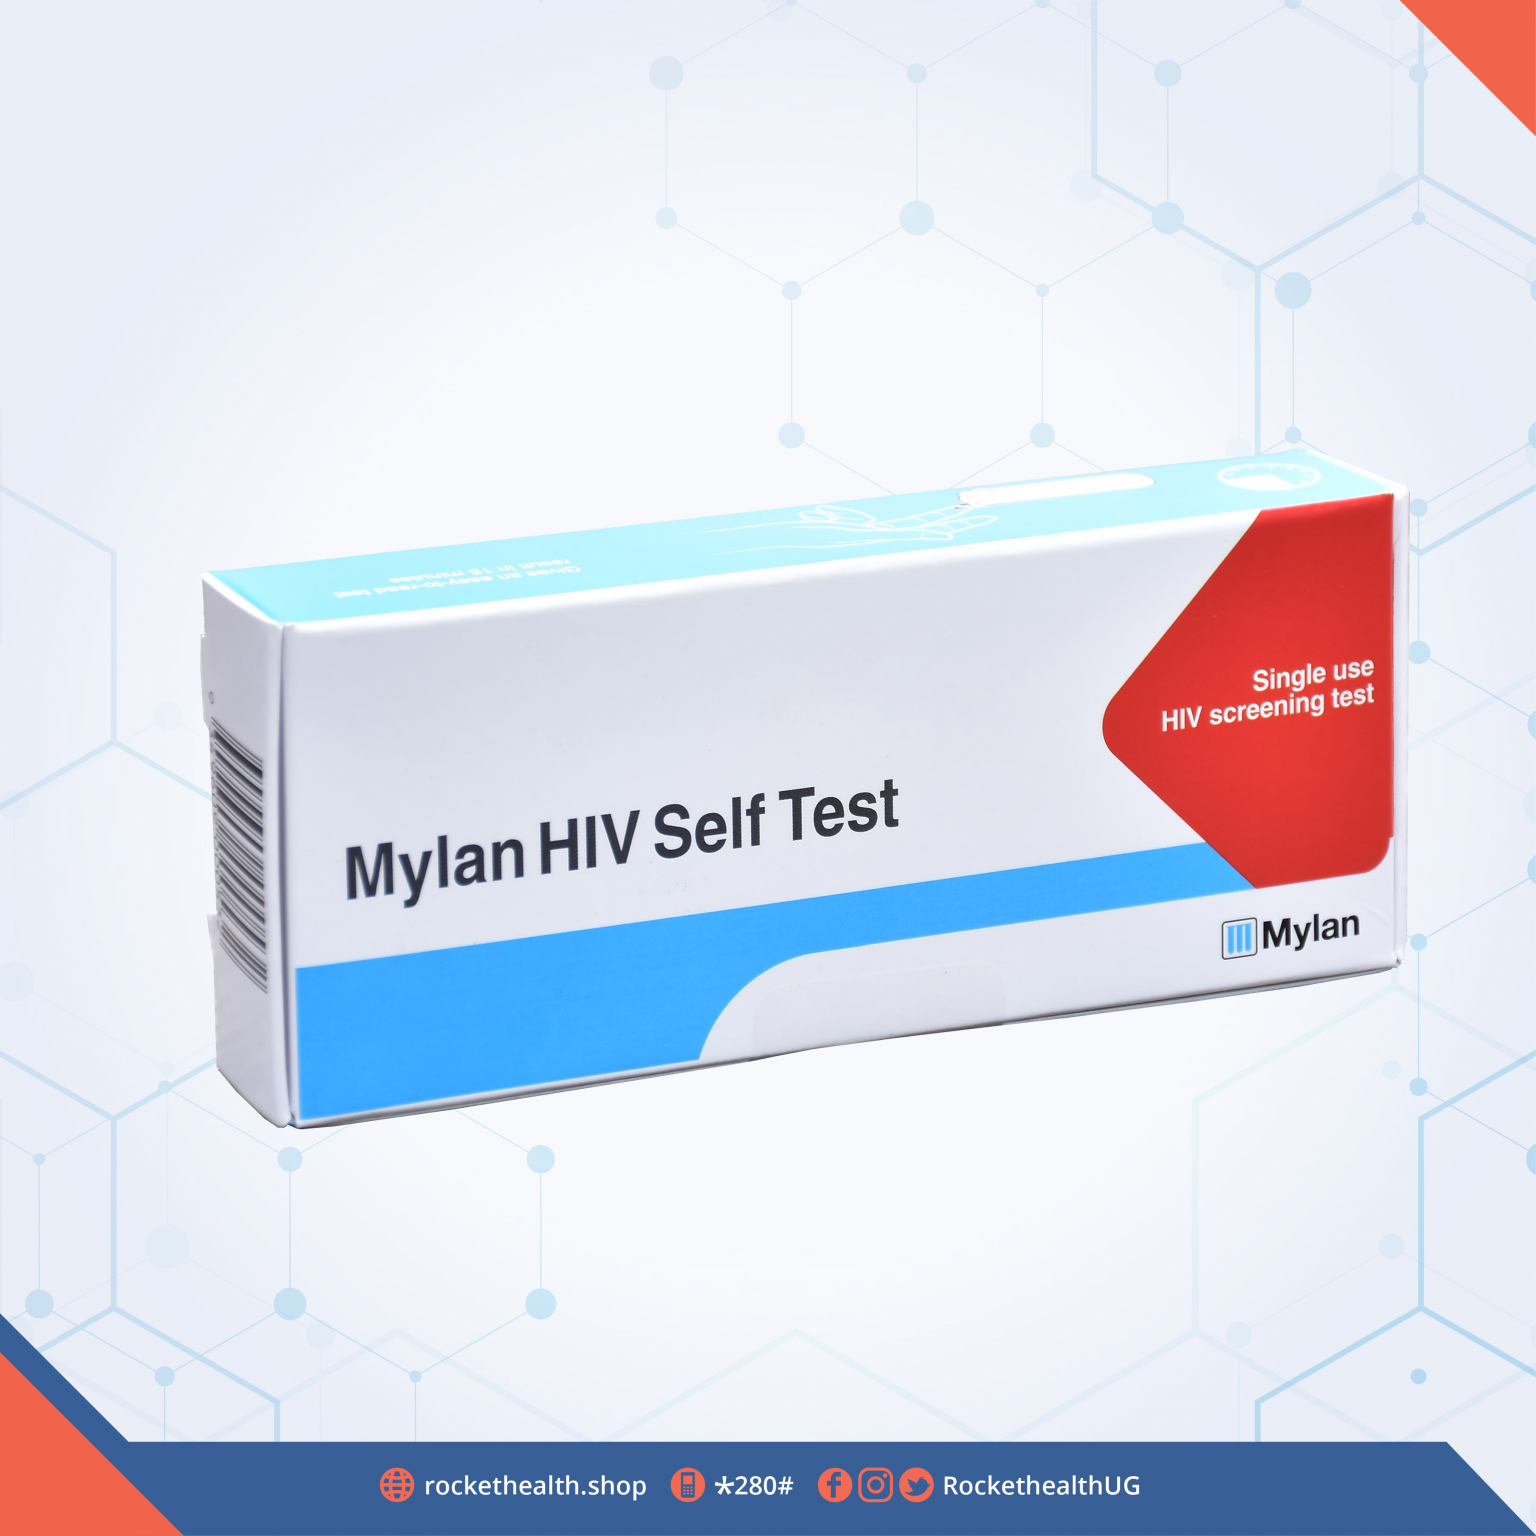 Mylan Hiv Self Test Kit Rocket Health